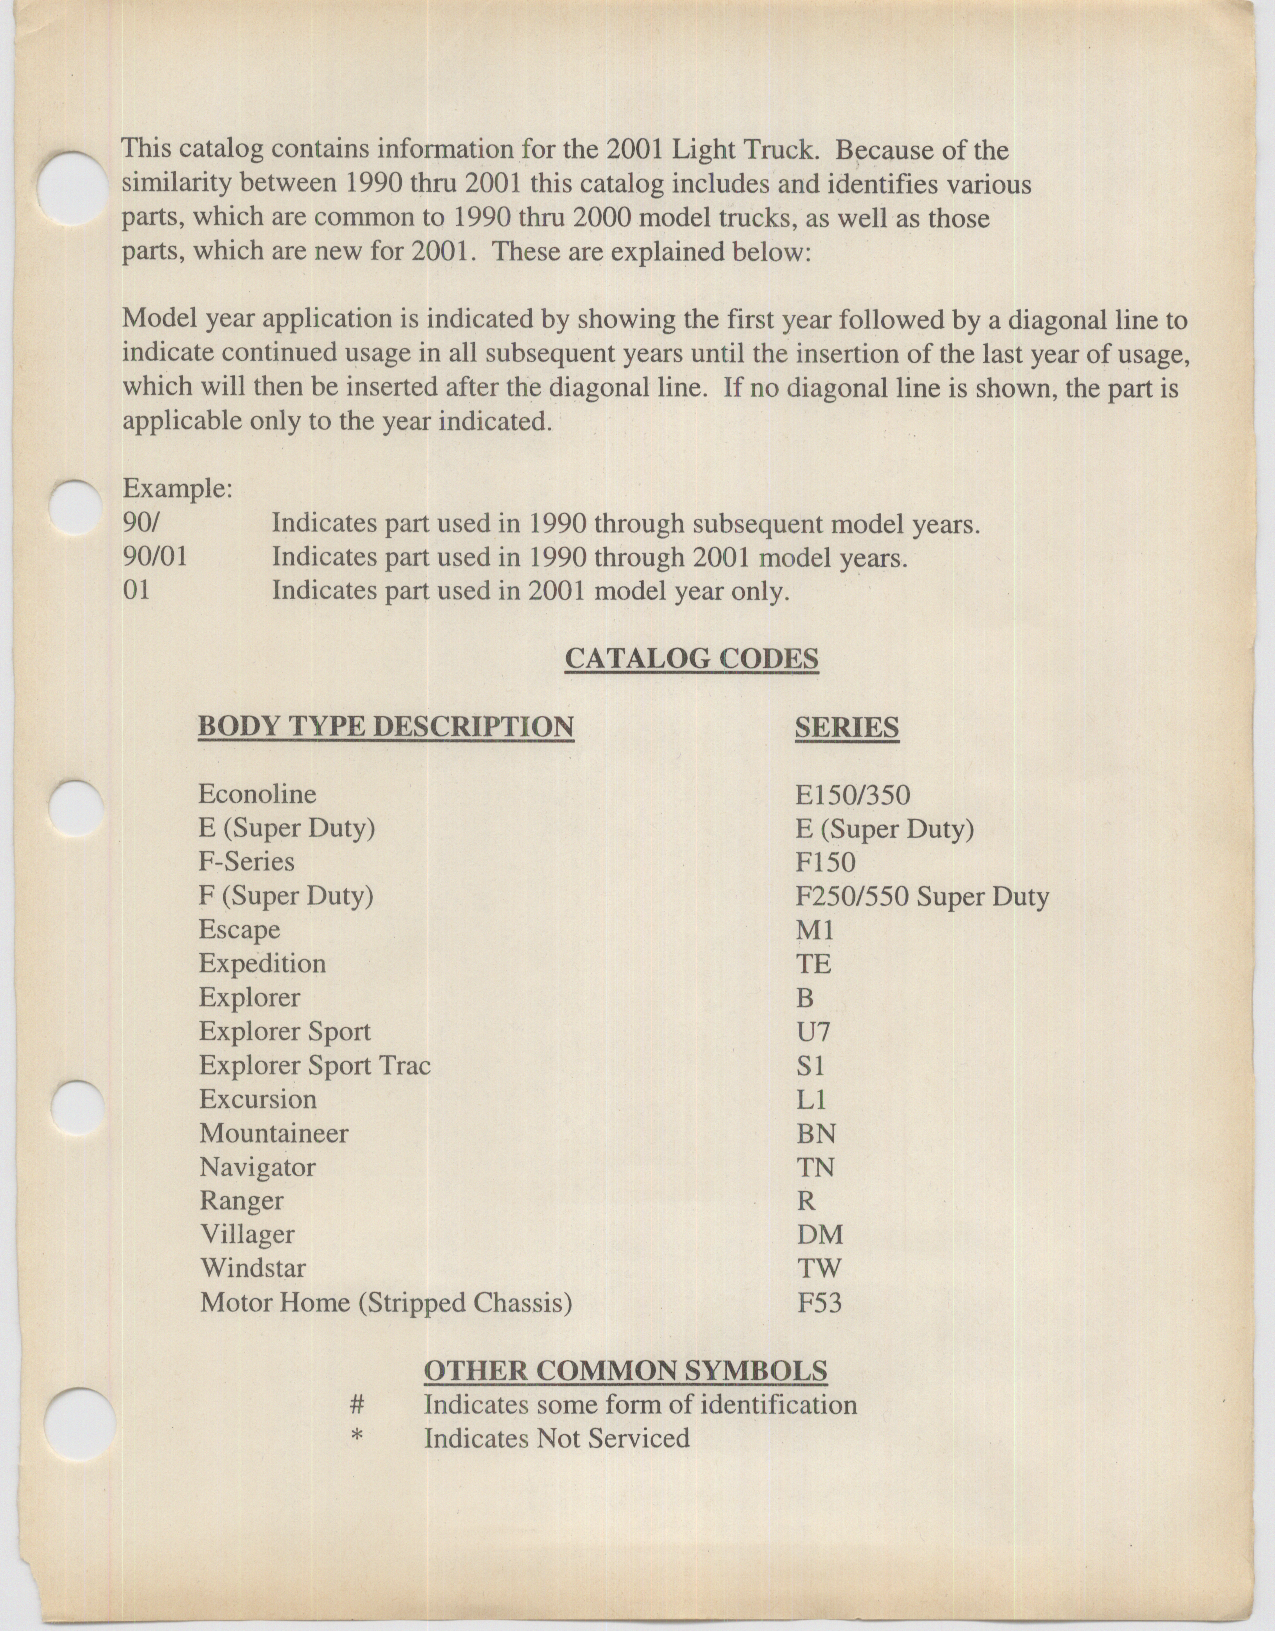 Ford Light Truck Parts Catalog Vol 2 Text Part 2 December 2000